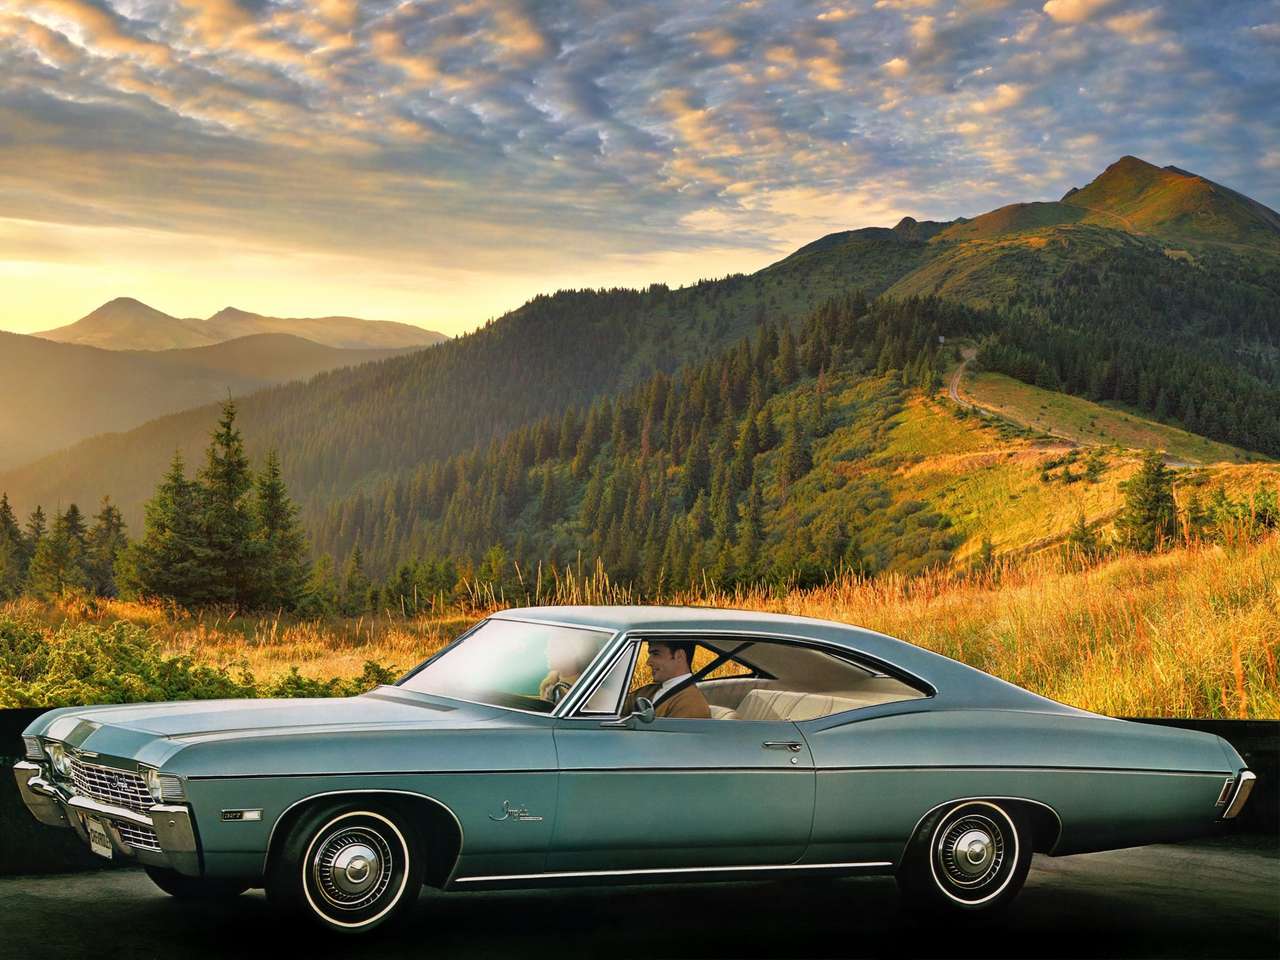 Chevrolet Impala Sport Coupe 1968 року випуску пазл онлайн